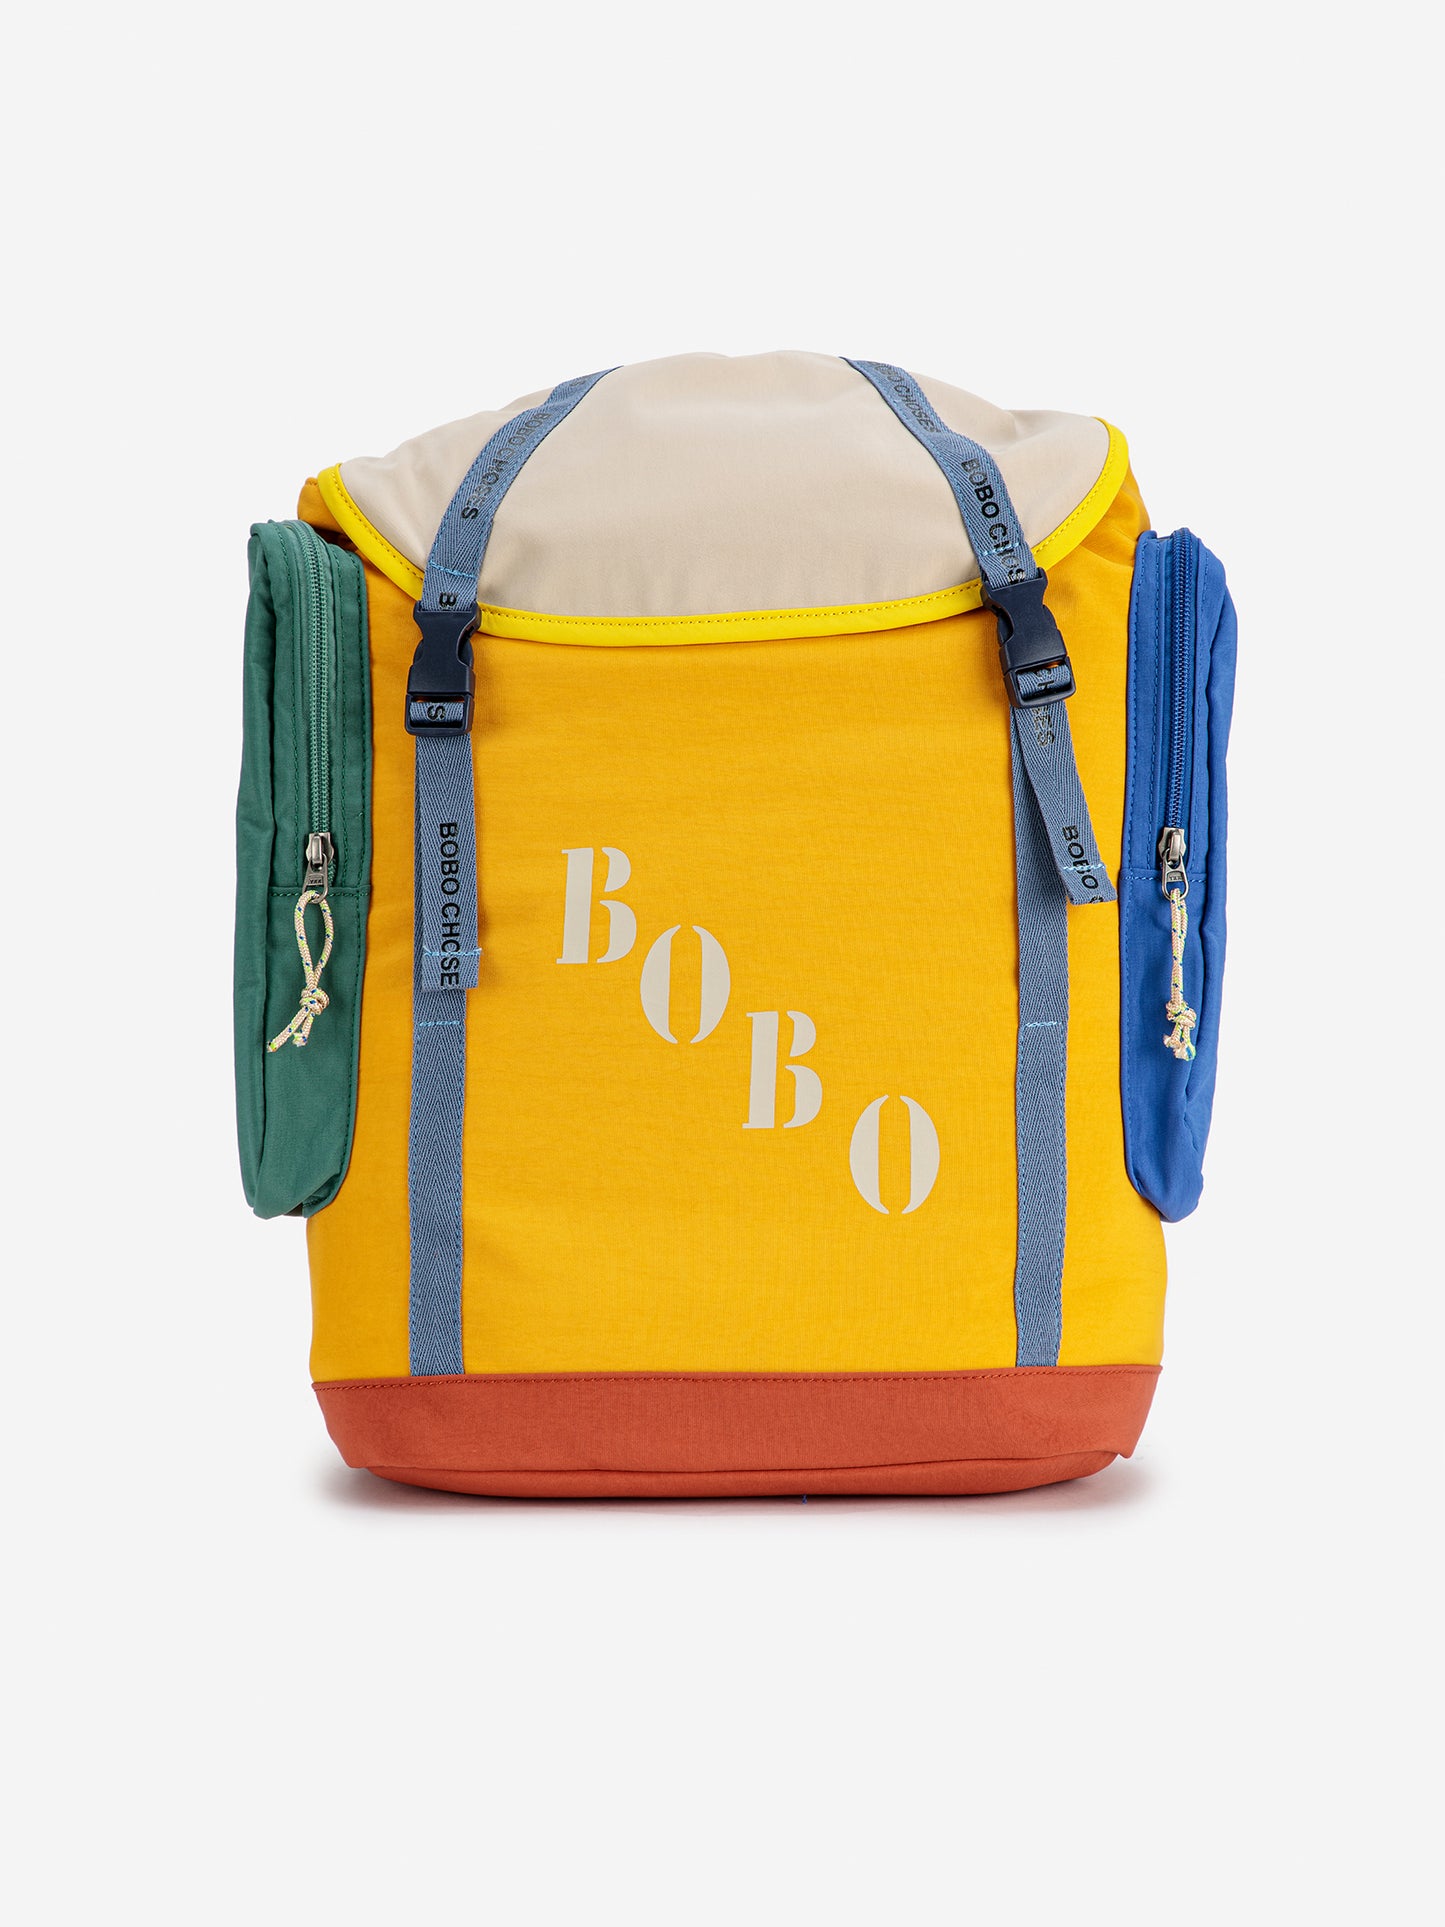 Bobo Choses Block Packpack